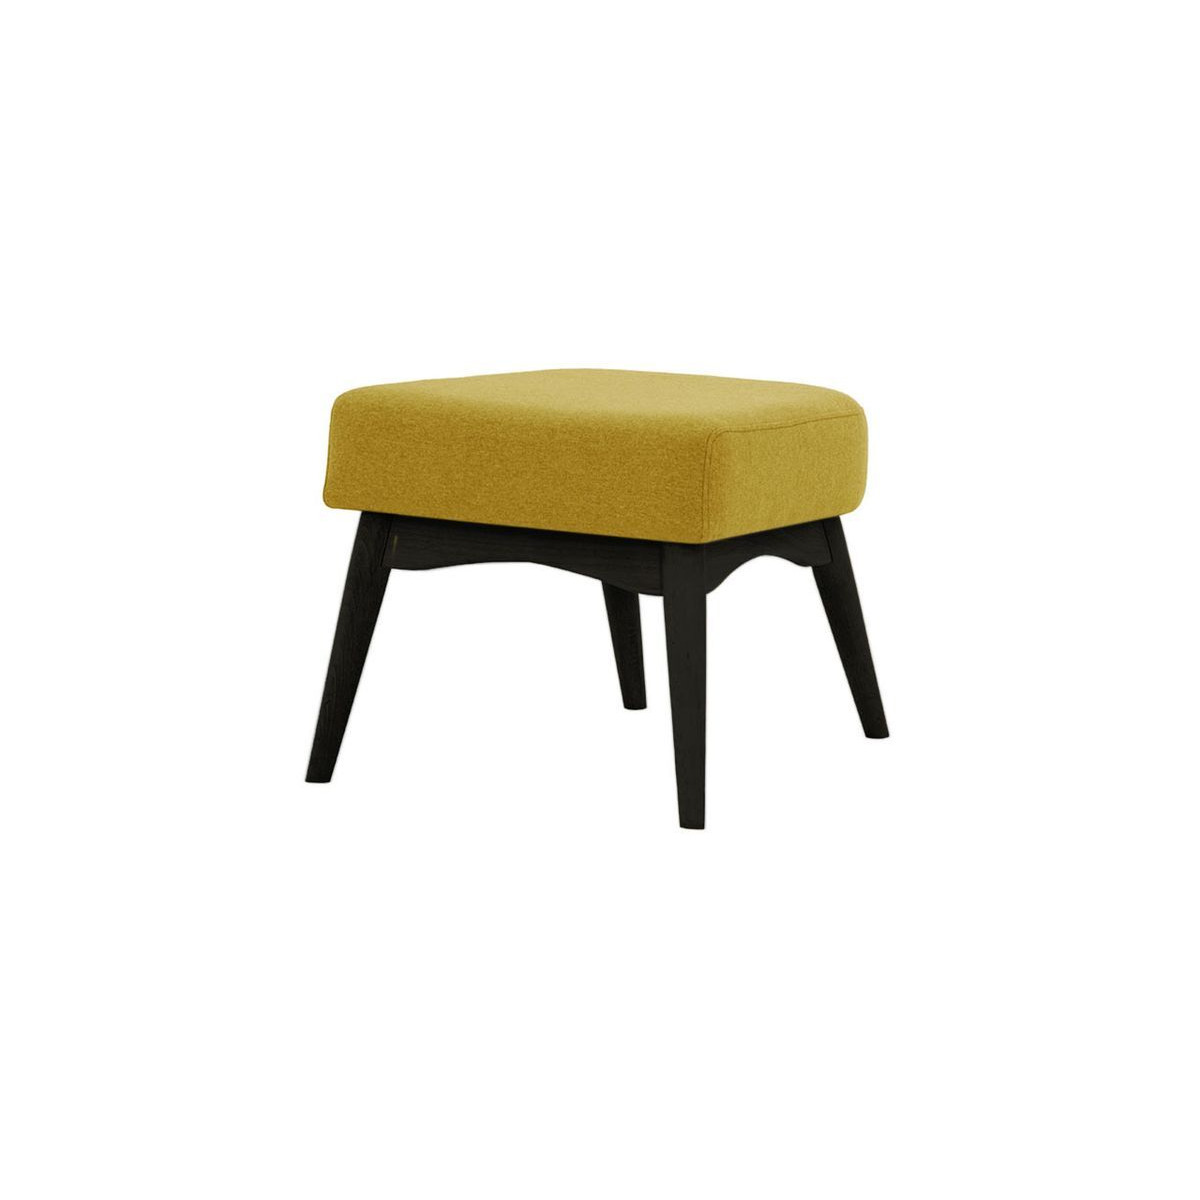 Savano Footstool, yellow, Leg colour: black - image 1